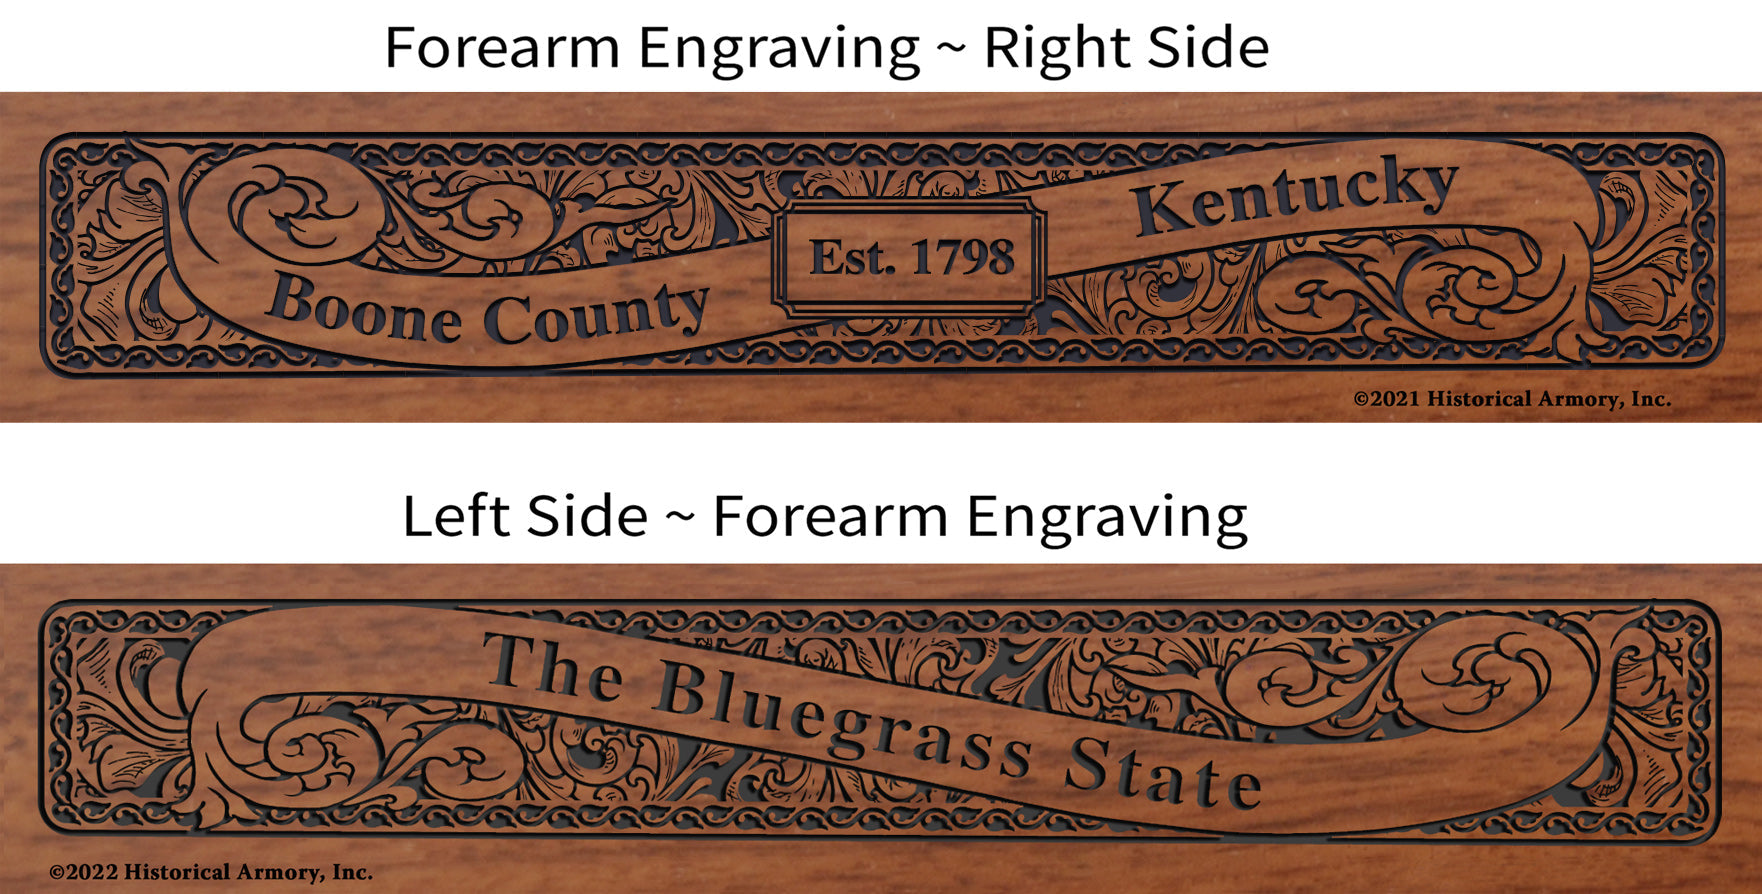 Boone County Kentucky Engraved Rifle Forearm